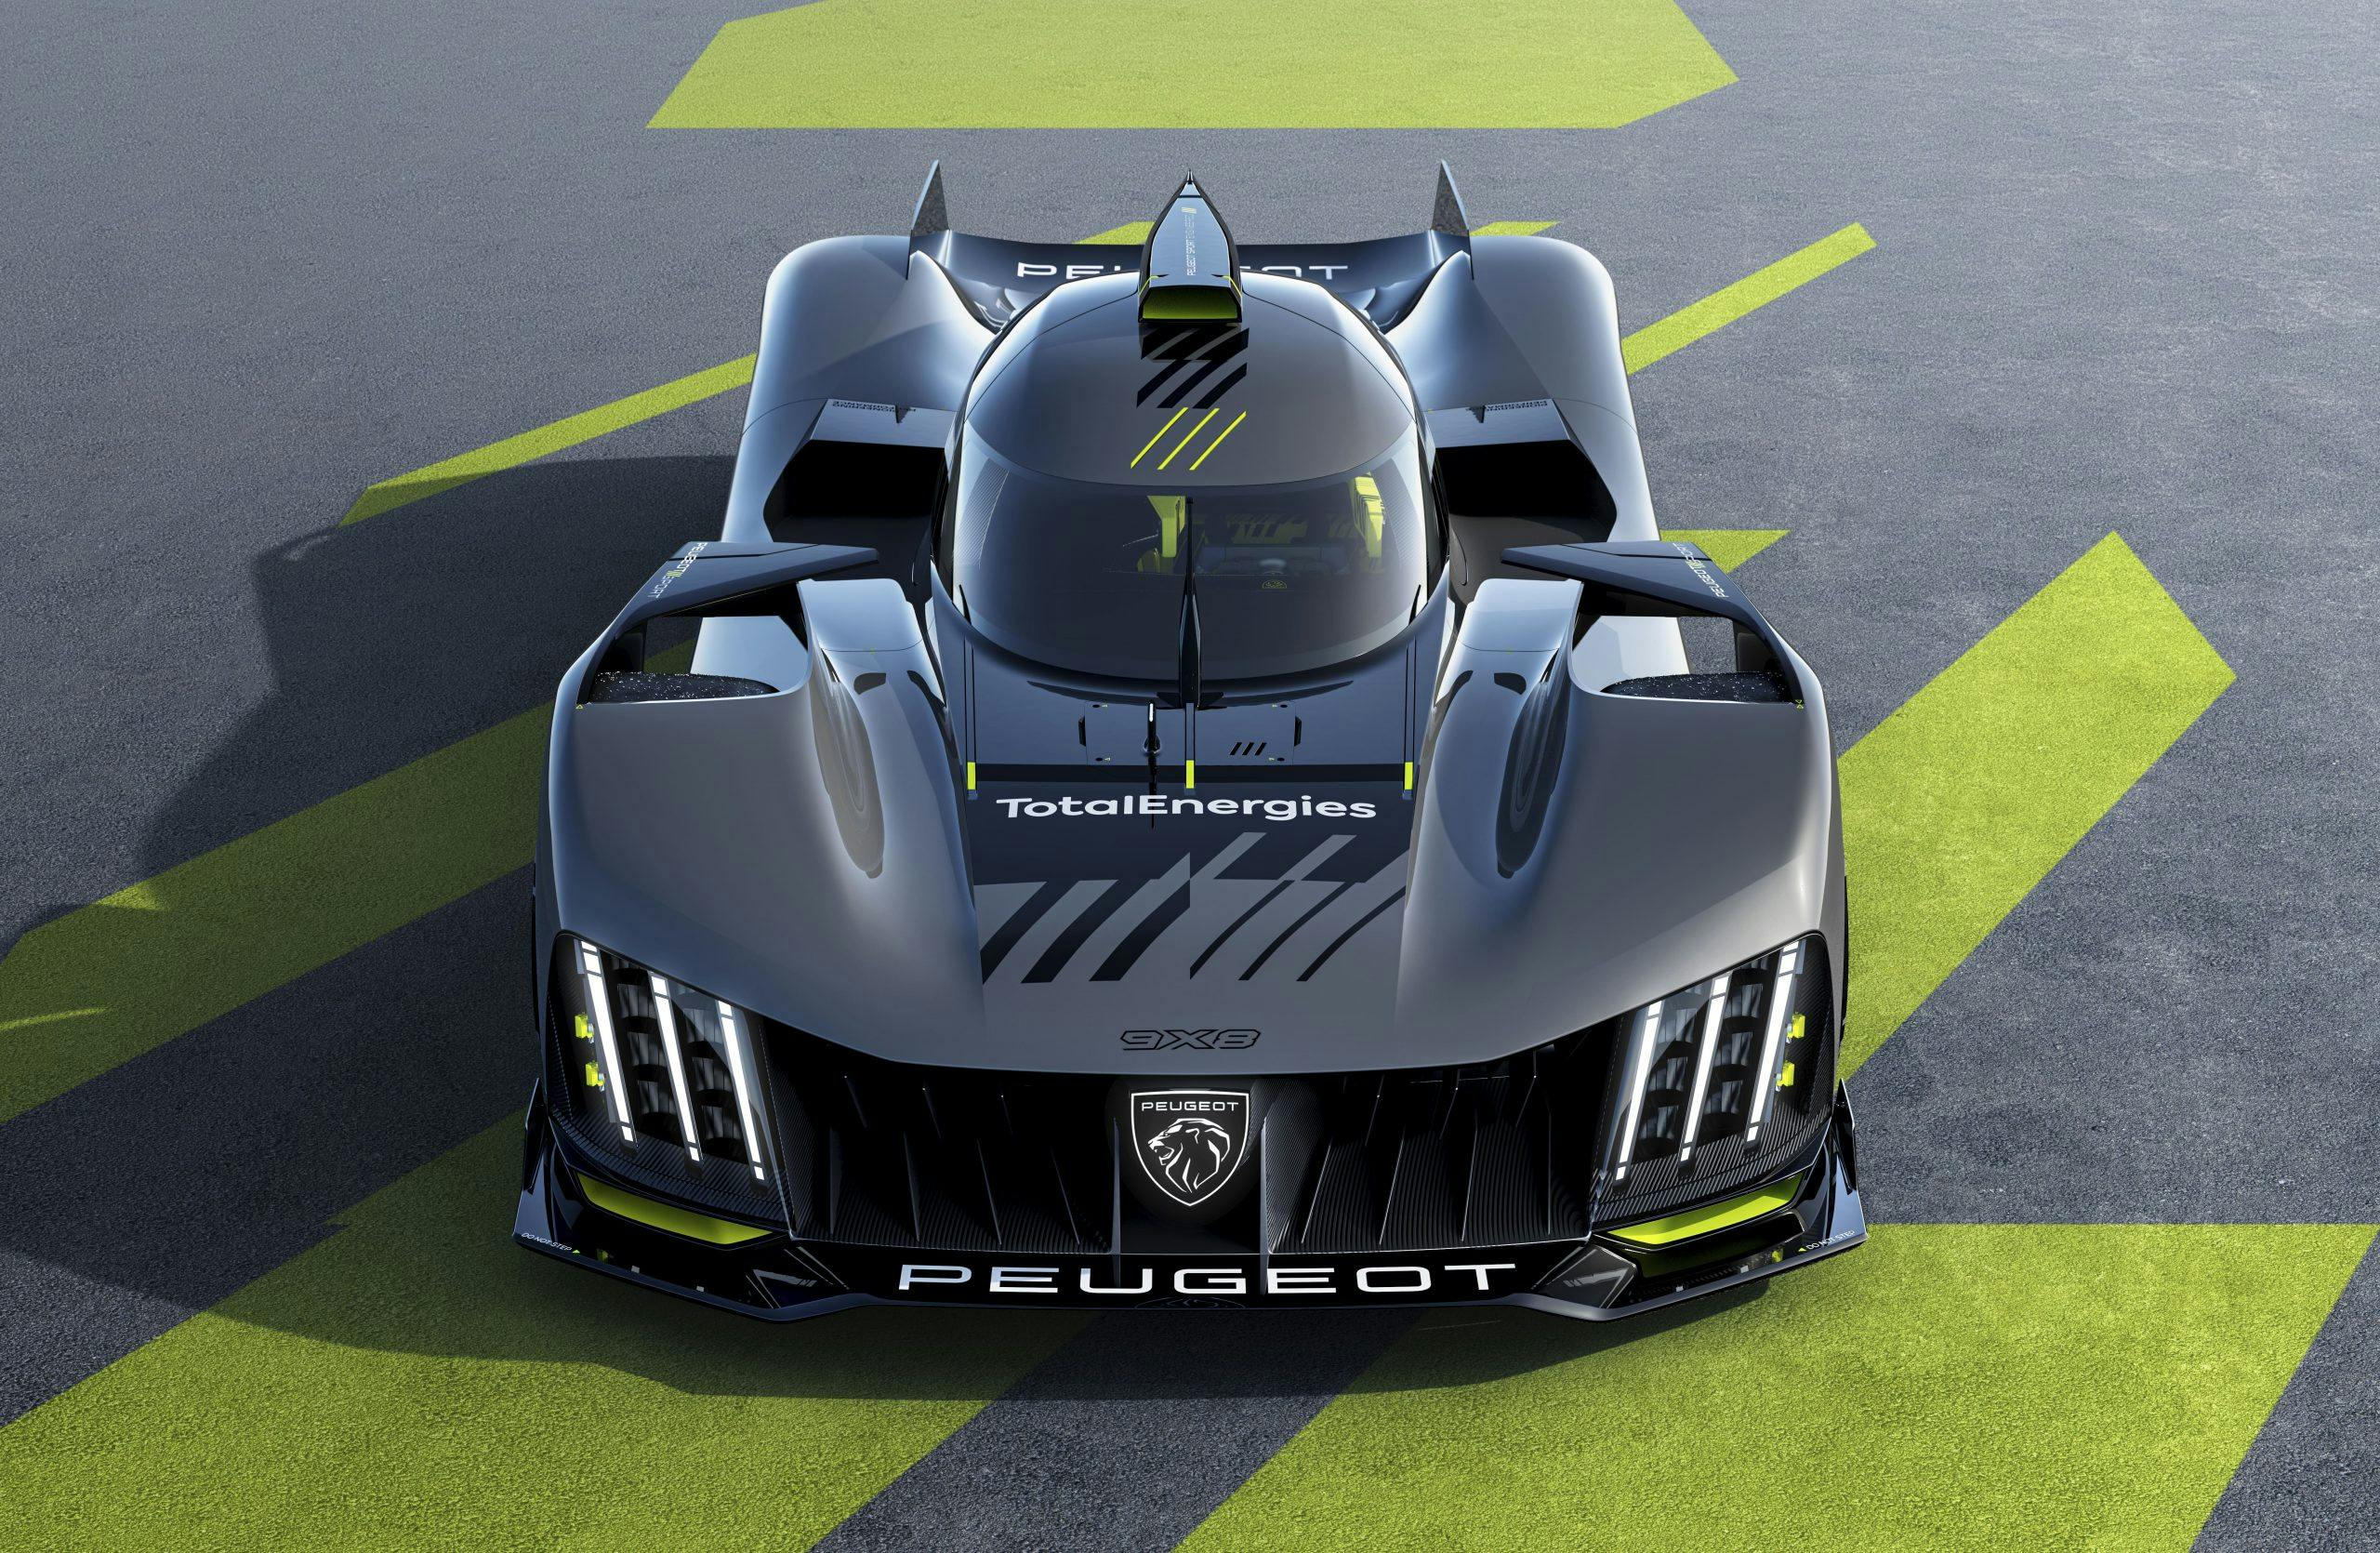 Peugeot Le Mans Hypercar LMH 9X8 WEC entry revealed